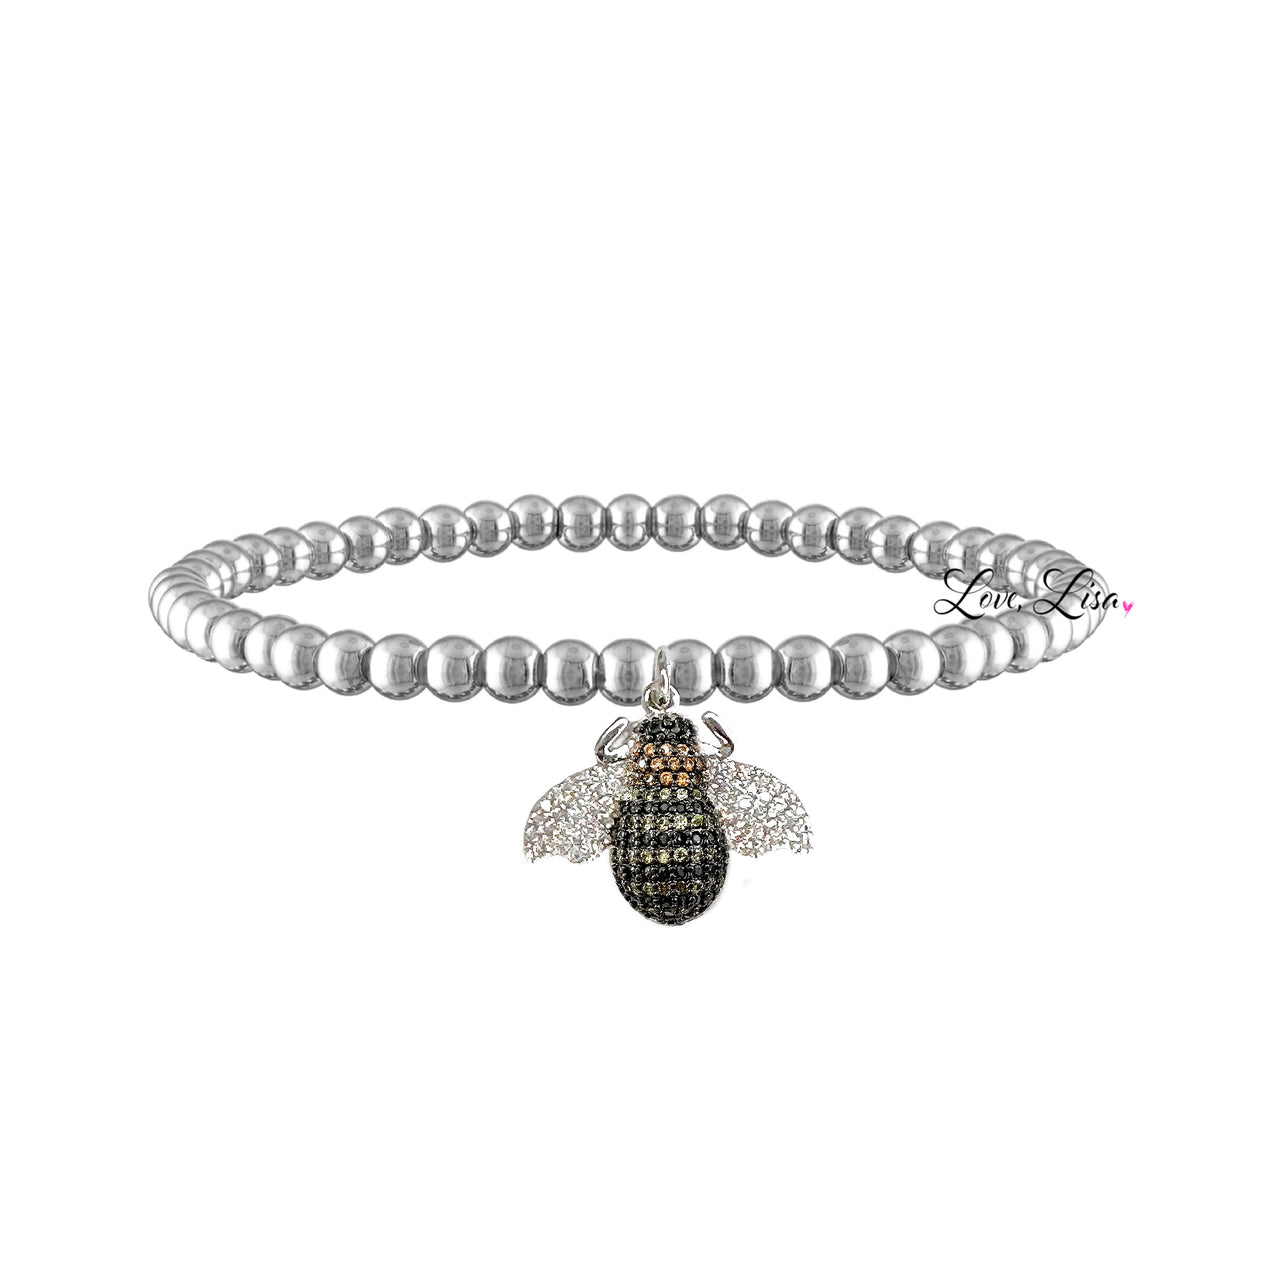 Molly Bee Charming Bracelet